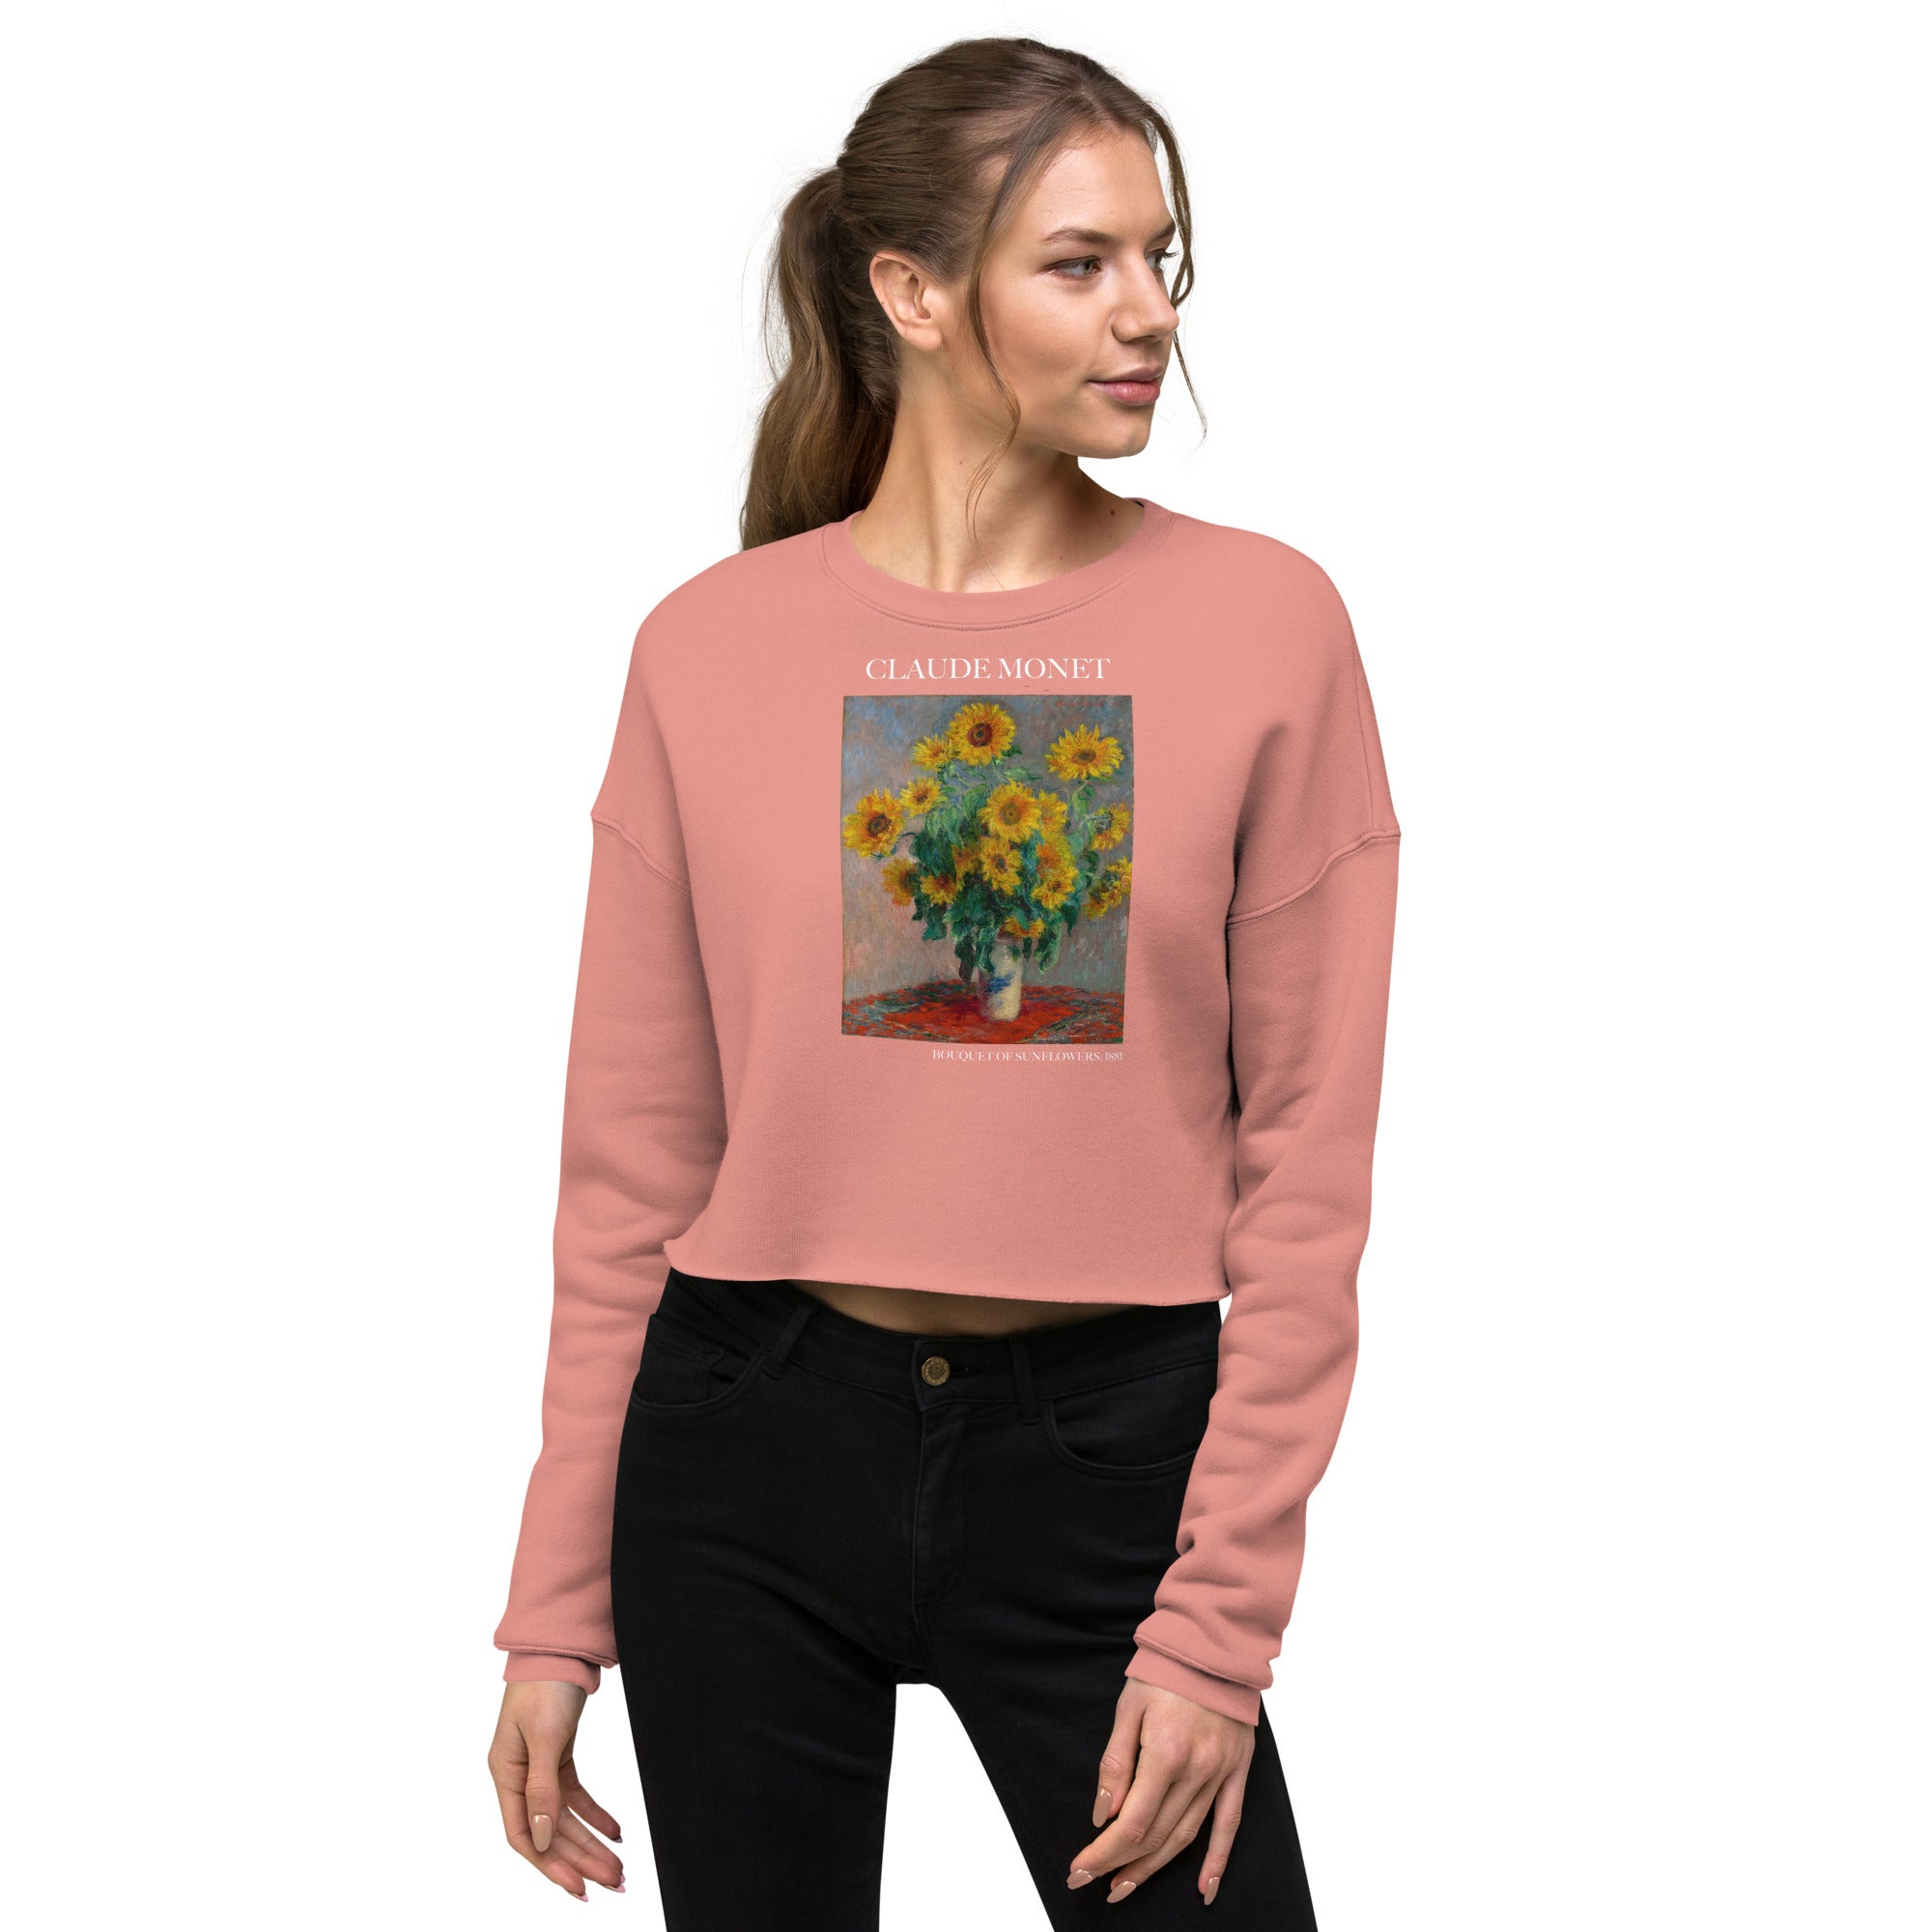 Claude Monet 'Sonnenblumenstrauß' Berühmtes Gemälde Kurzes Sweatshirt | Premium Art Kurzes Sweatshirt